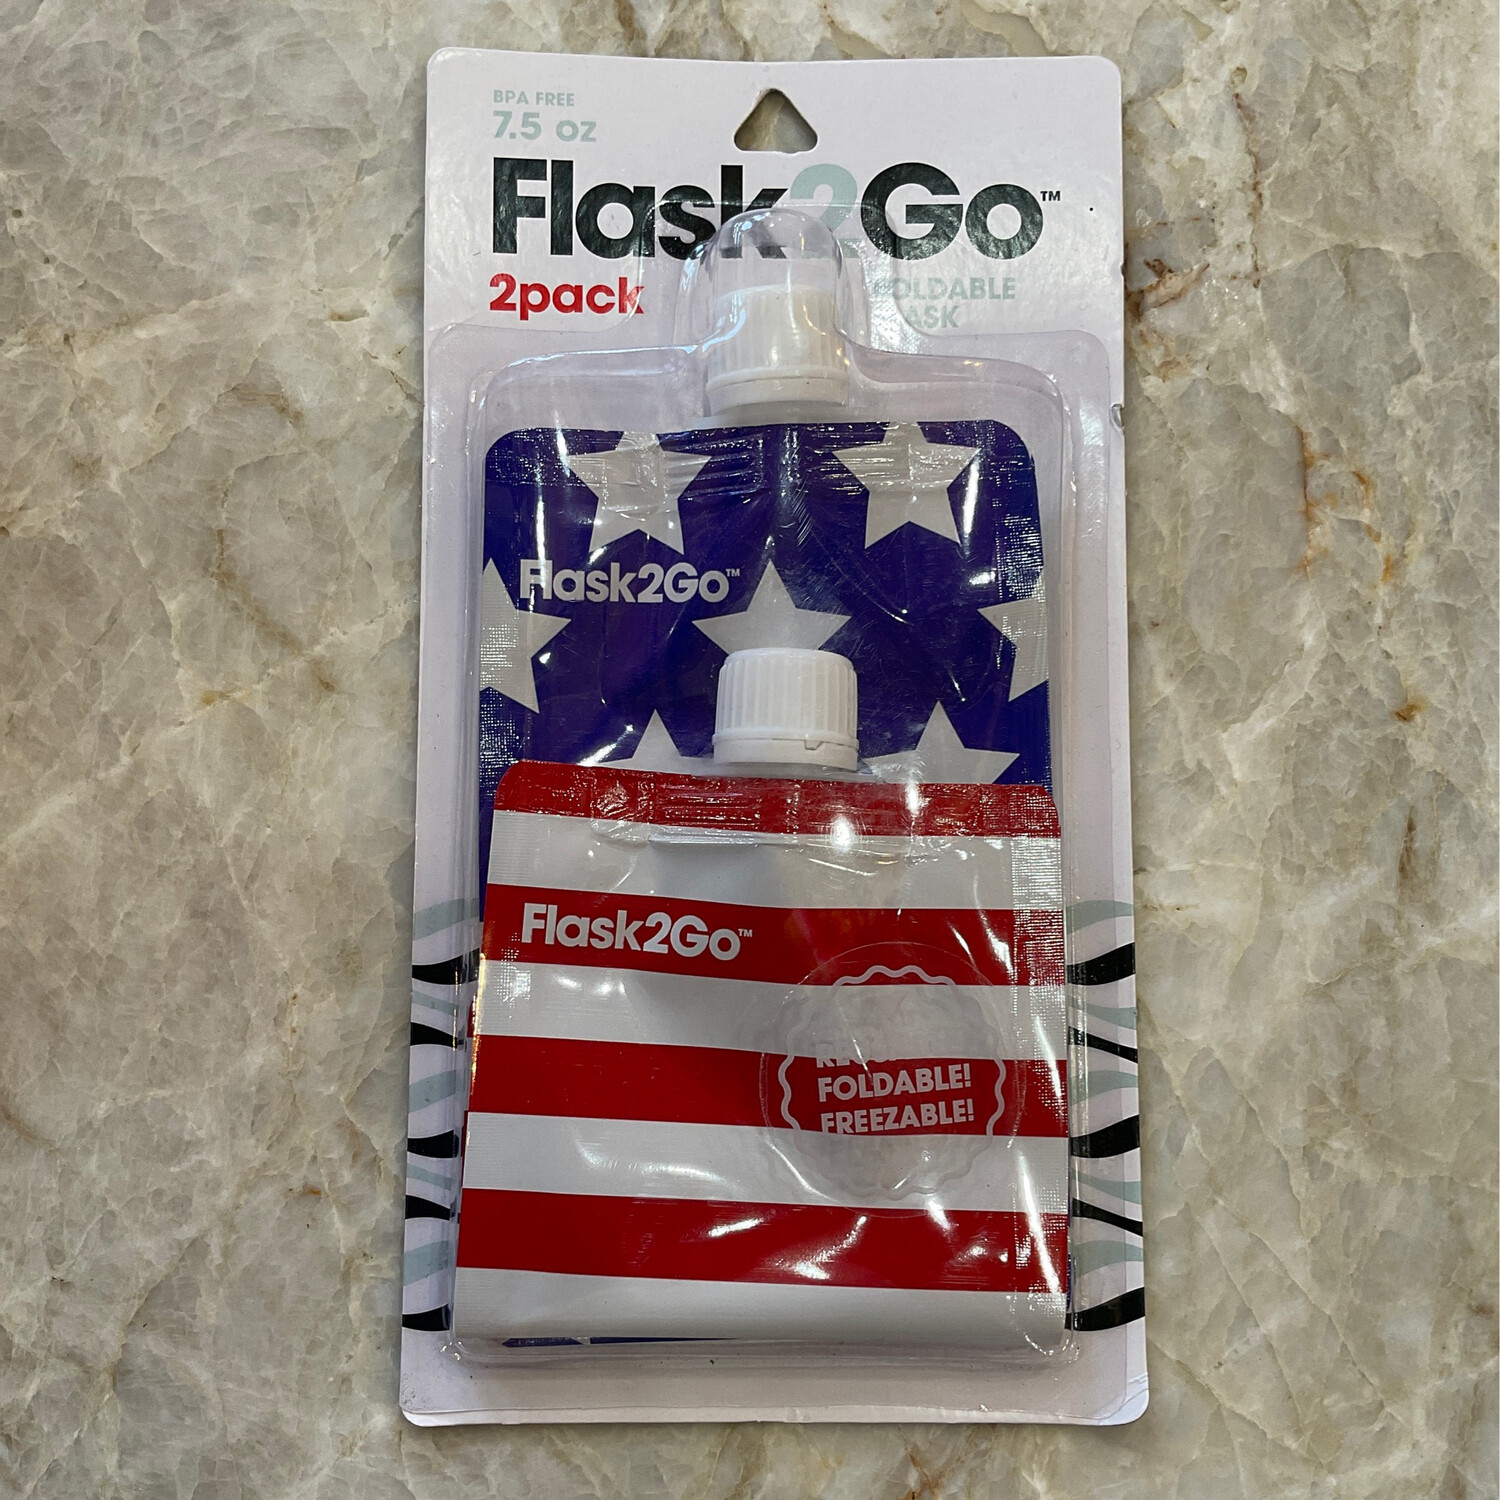 Source 1 F2G-USA Stars & Stripes Flask 2GO 